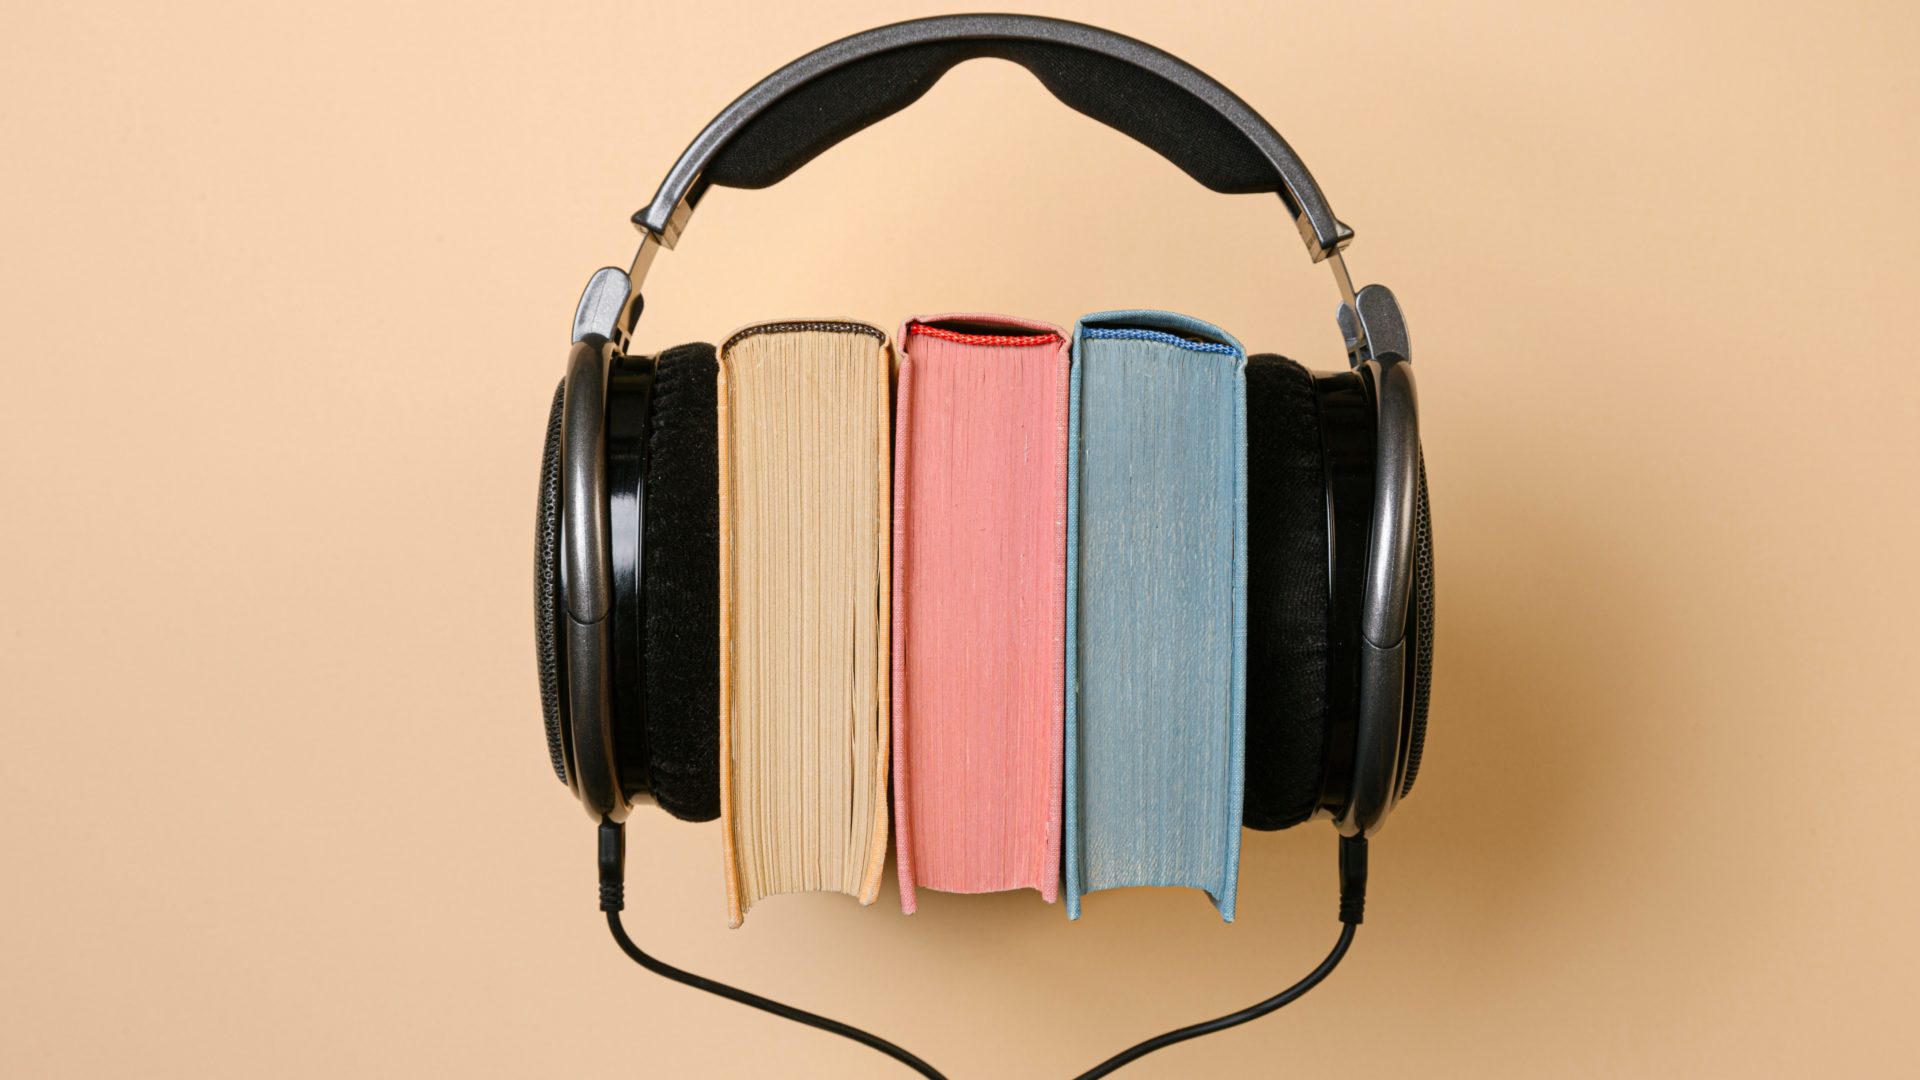 photo of books within headphones representing audio books